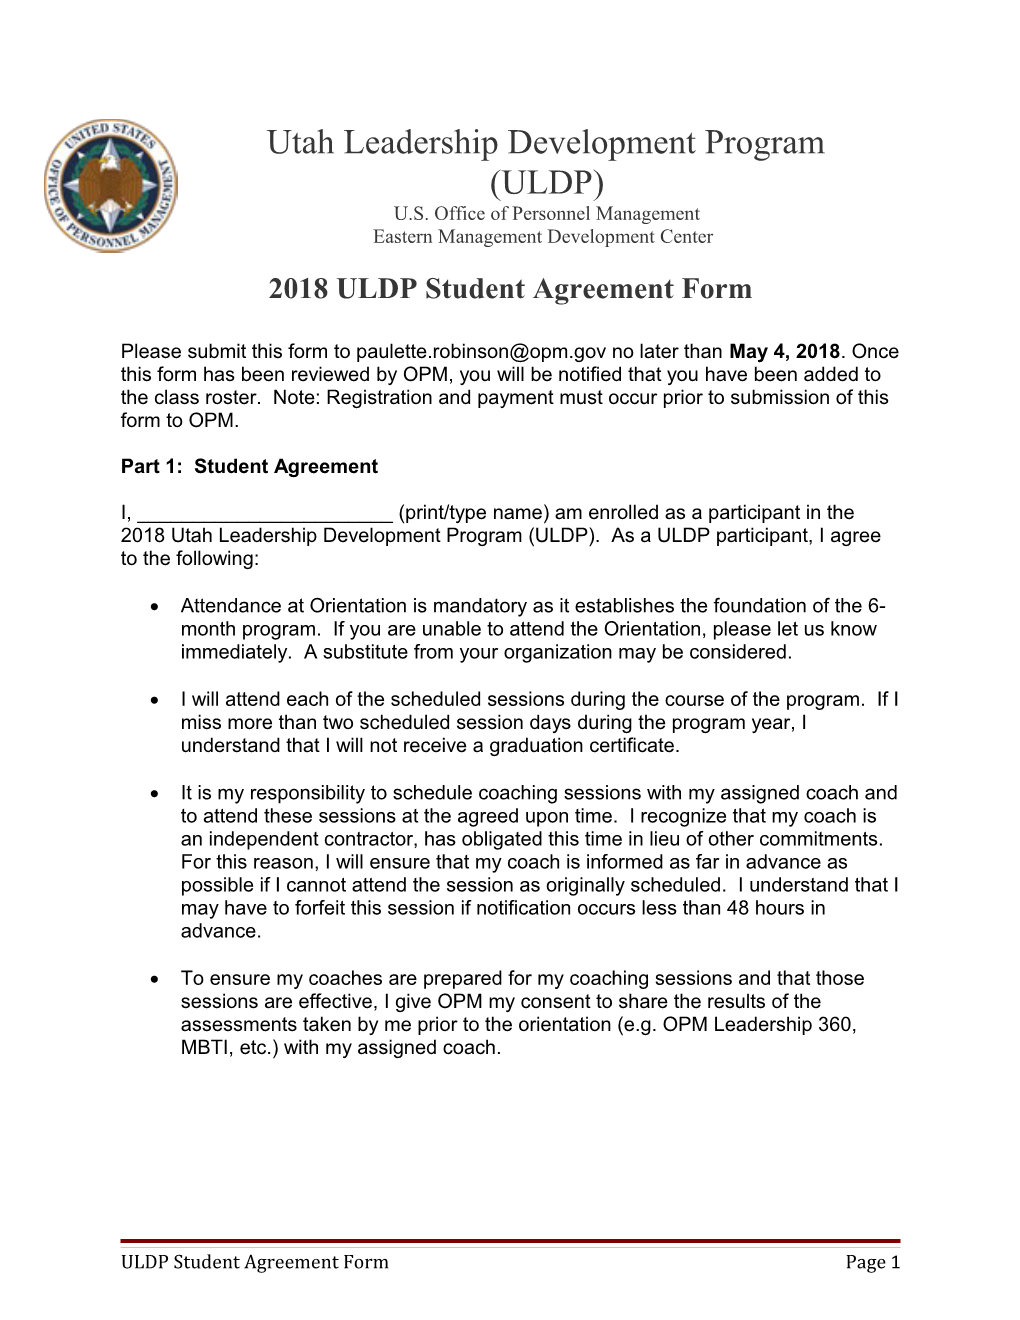 2018 ULDP Student Agreement Form